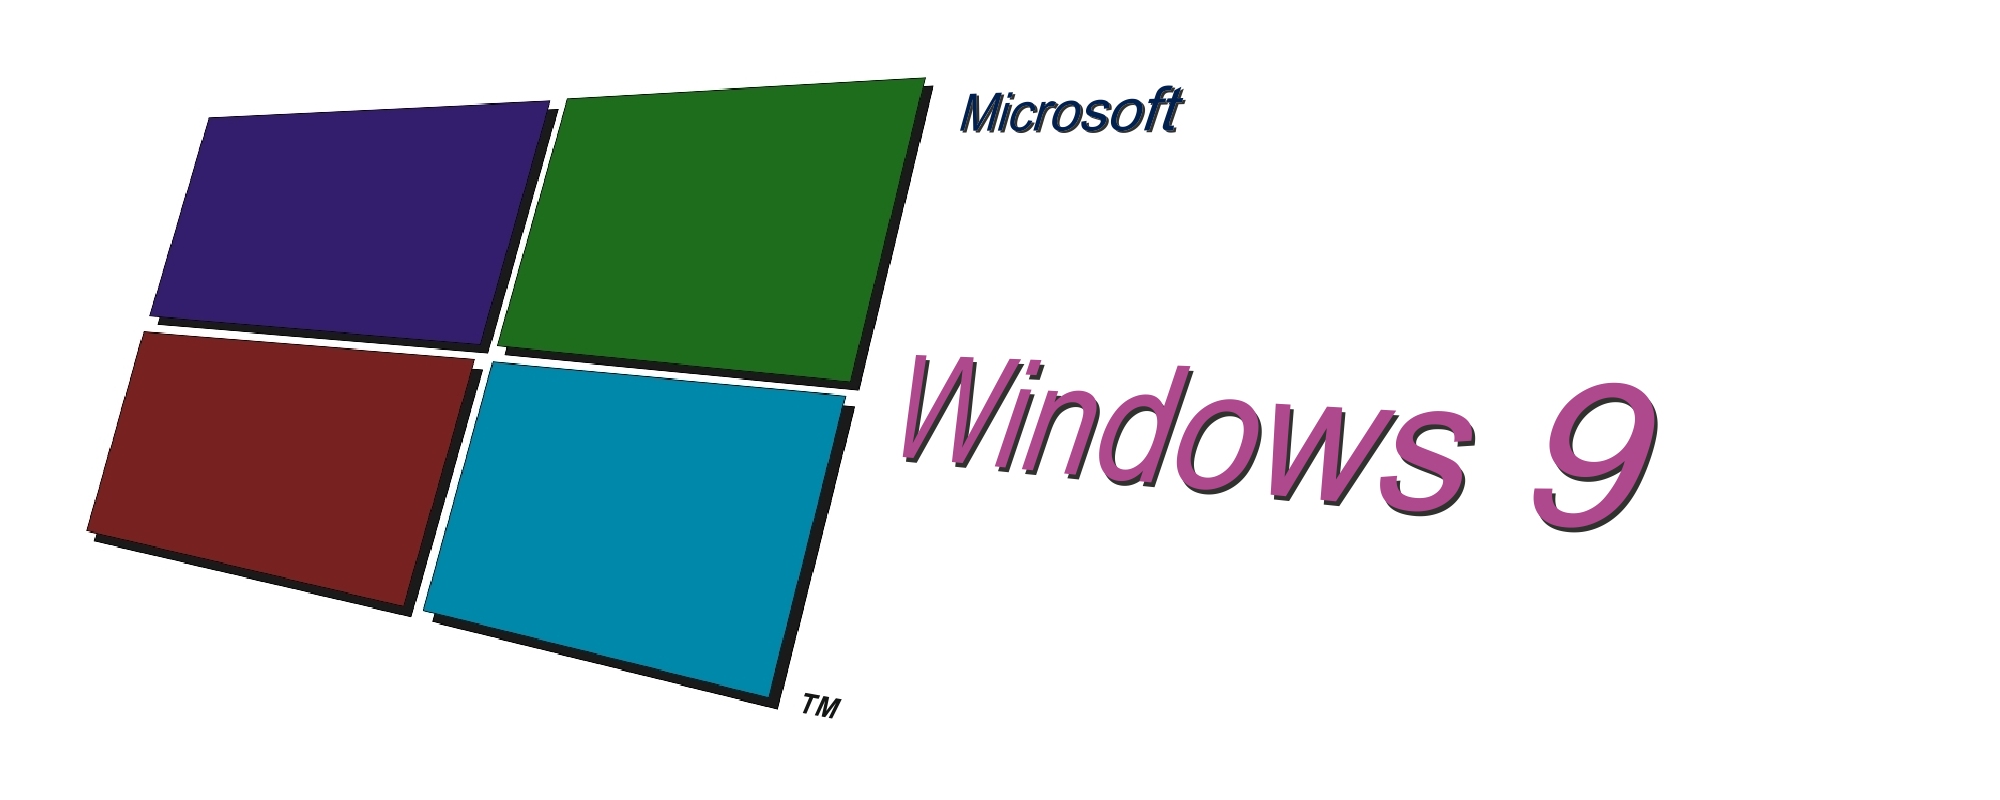 Windows 9 new logo 2.jpg